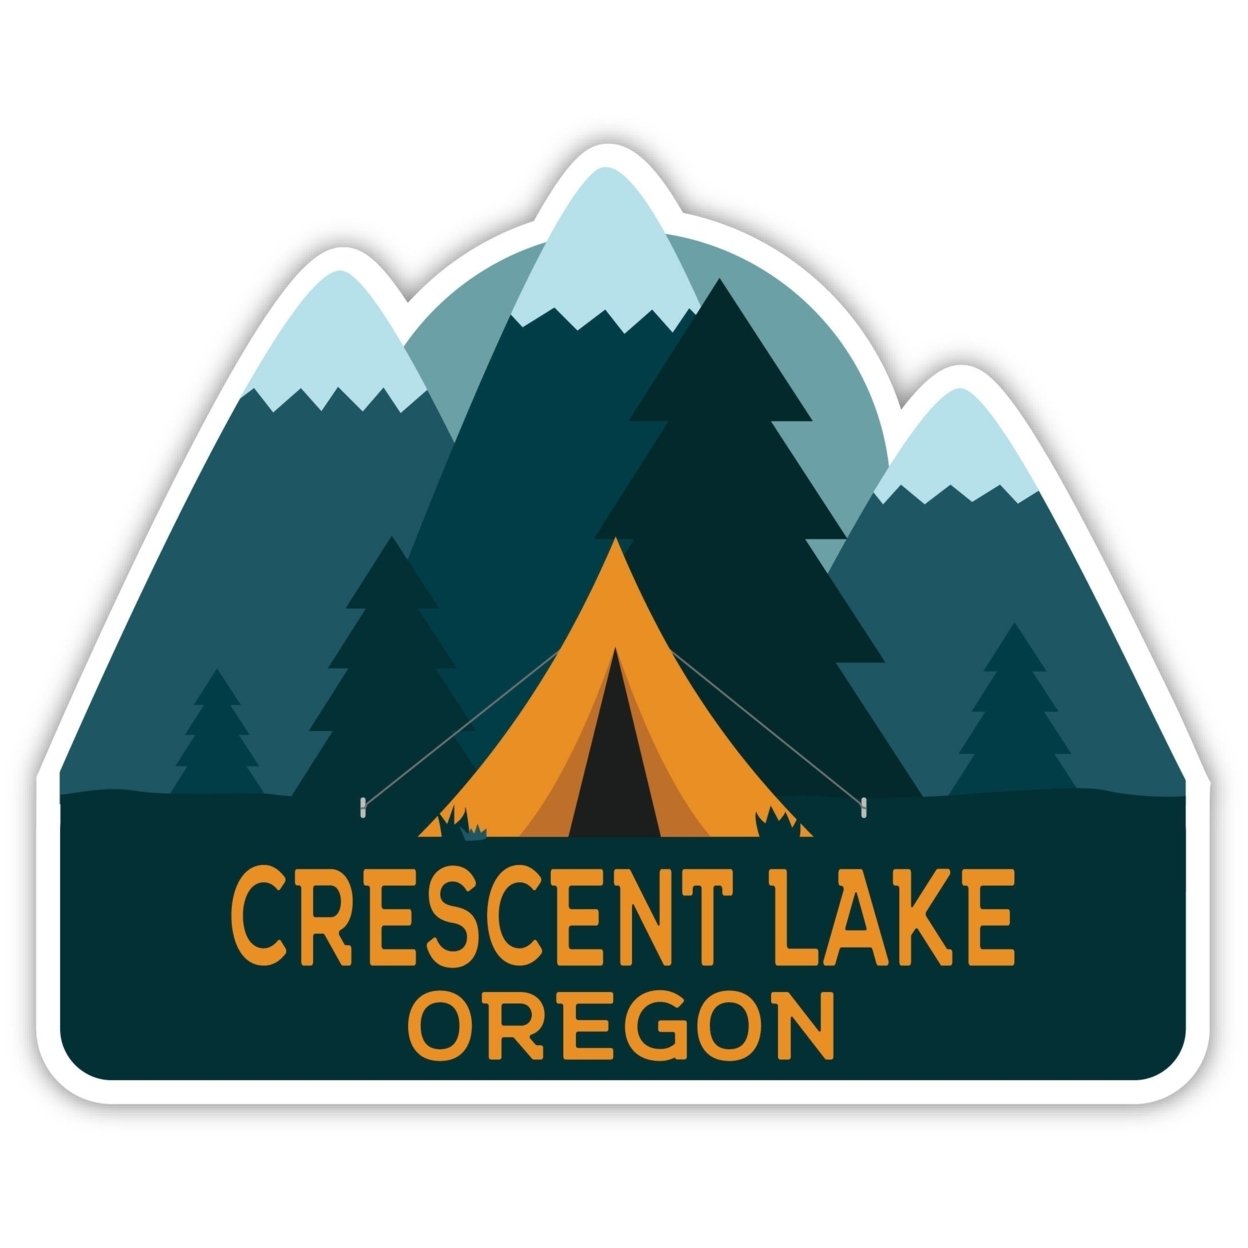 Crescent Lake Oregon Souvenir Decorative Stickers (Choose Theme And Size) - 4-Pack, 4-Inch, Tent